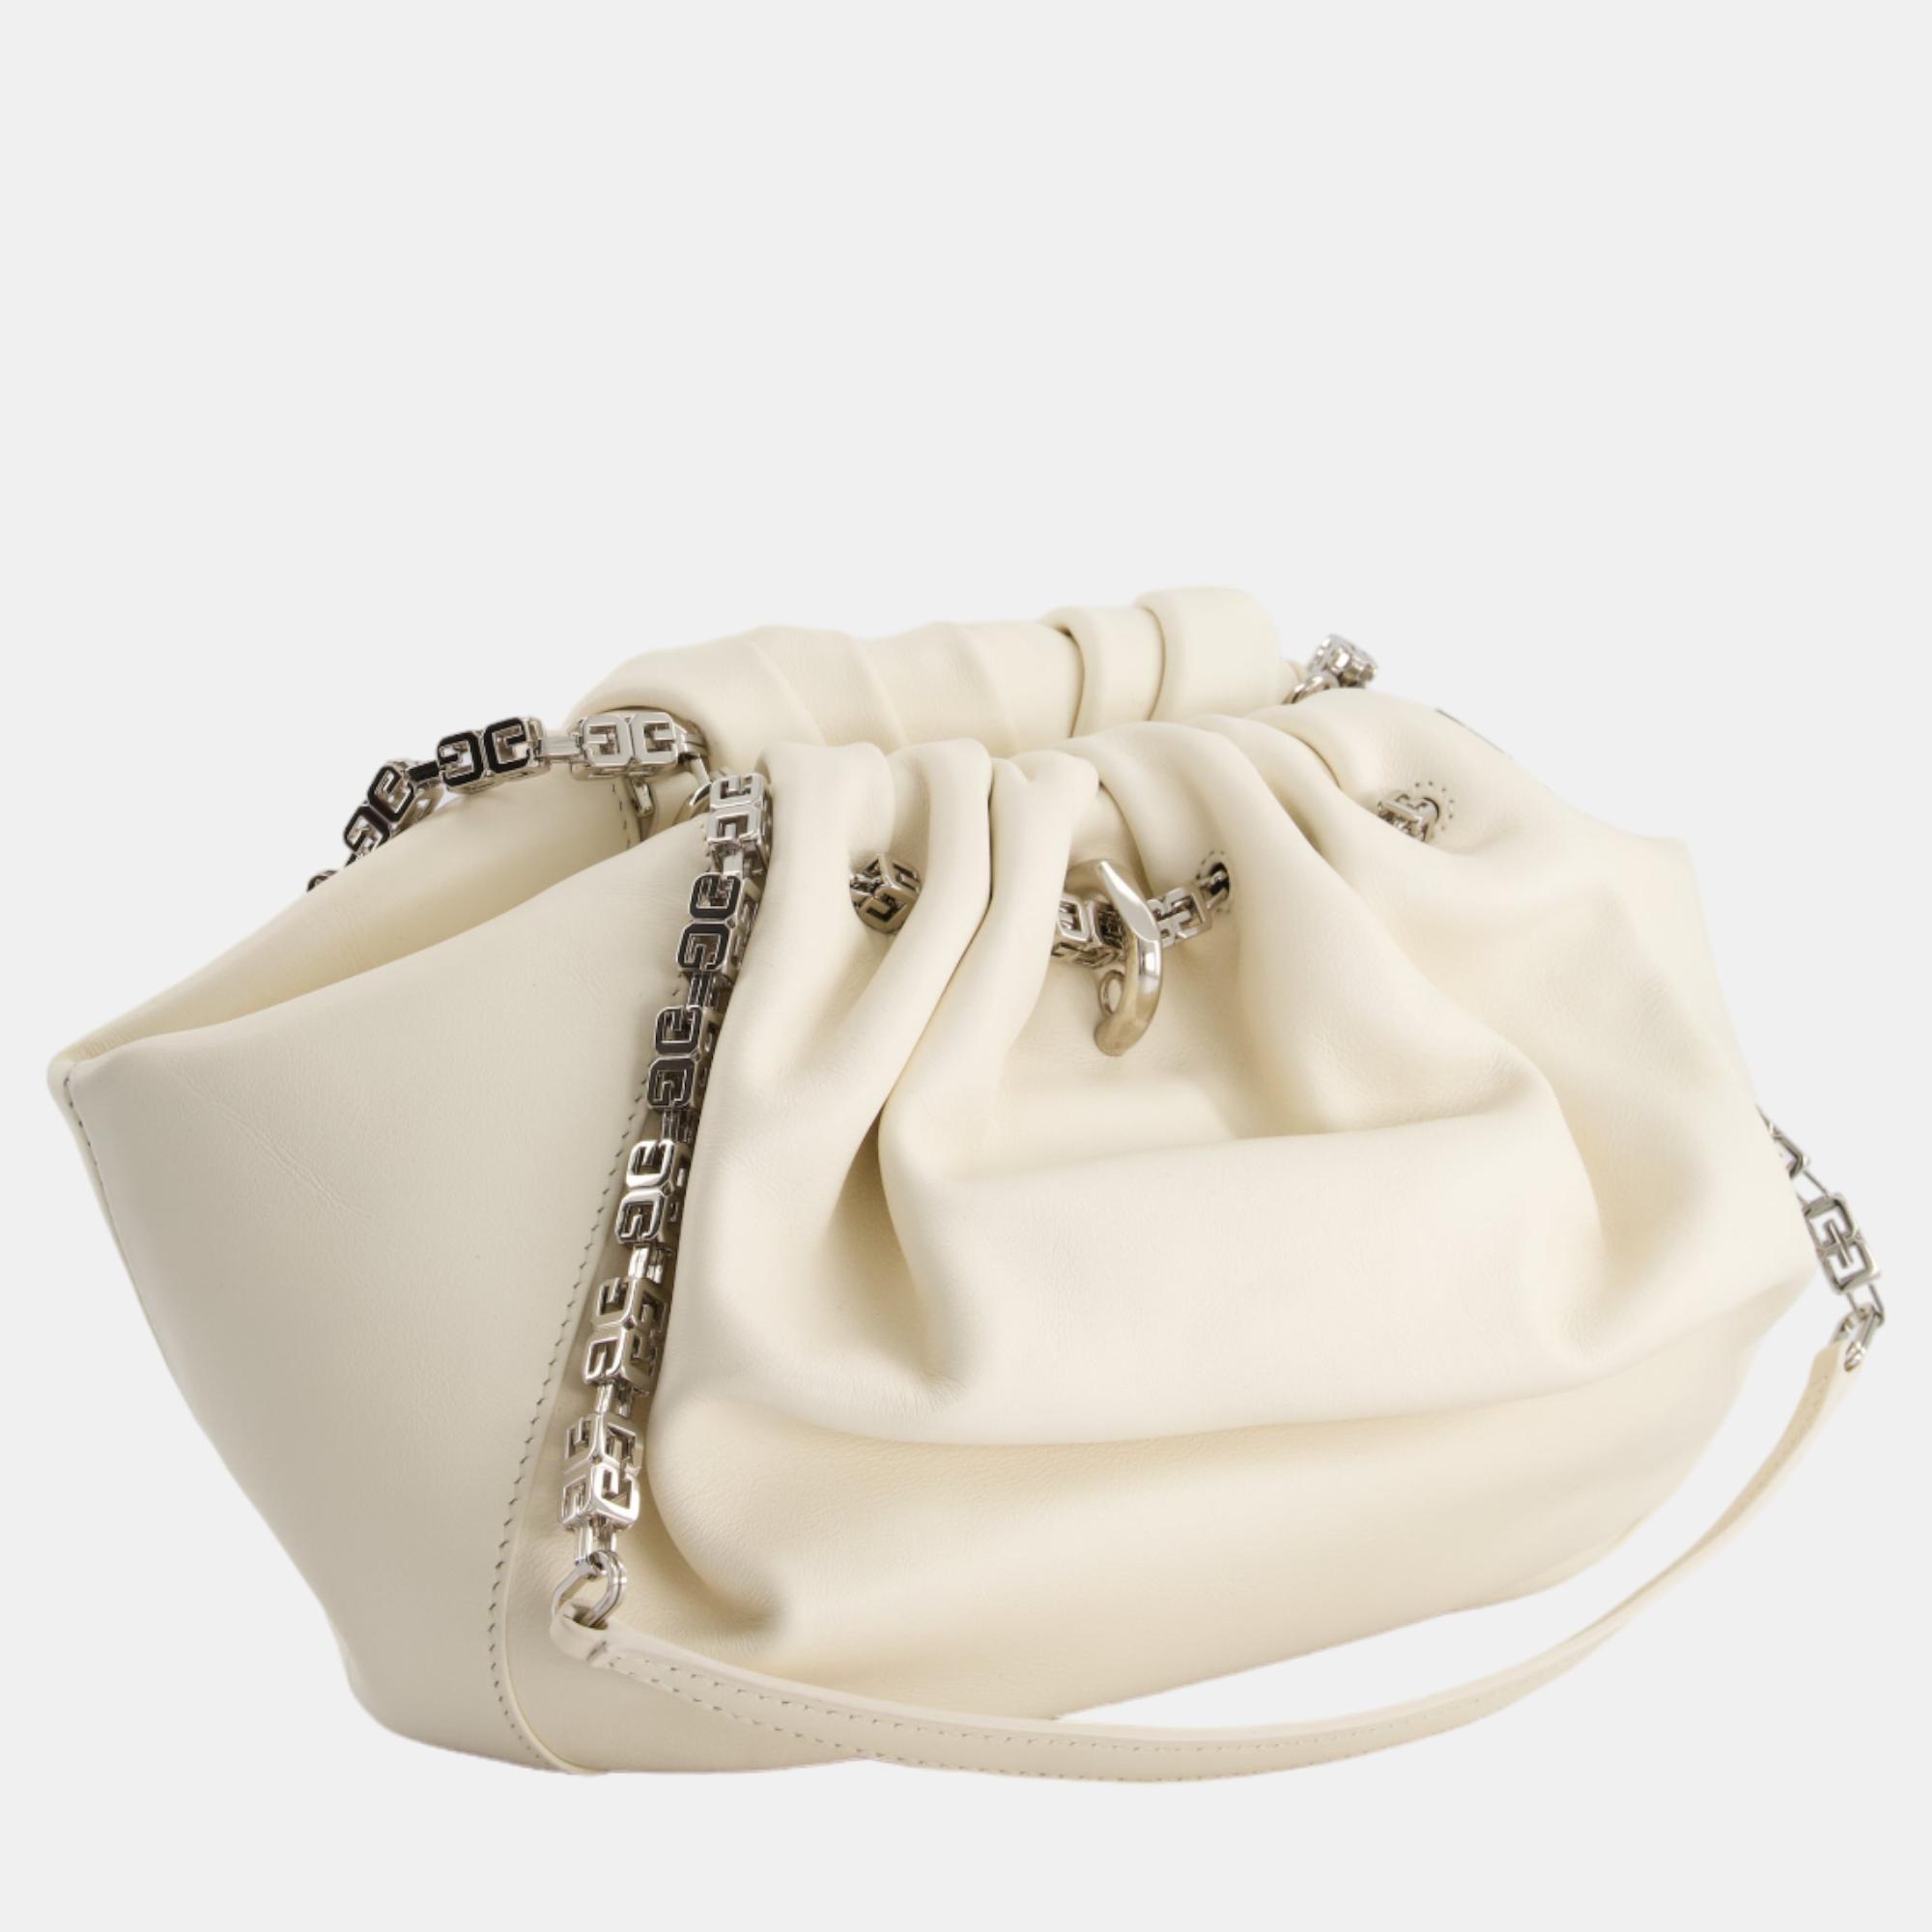 Givenchy White Kenny Small Embellished Leather Shoulder Bag